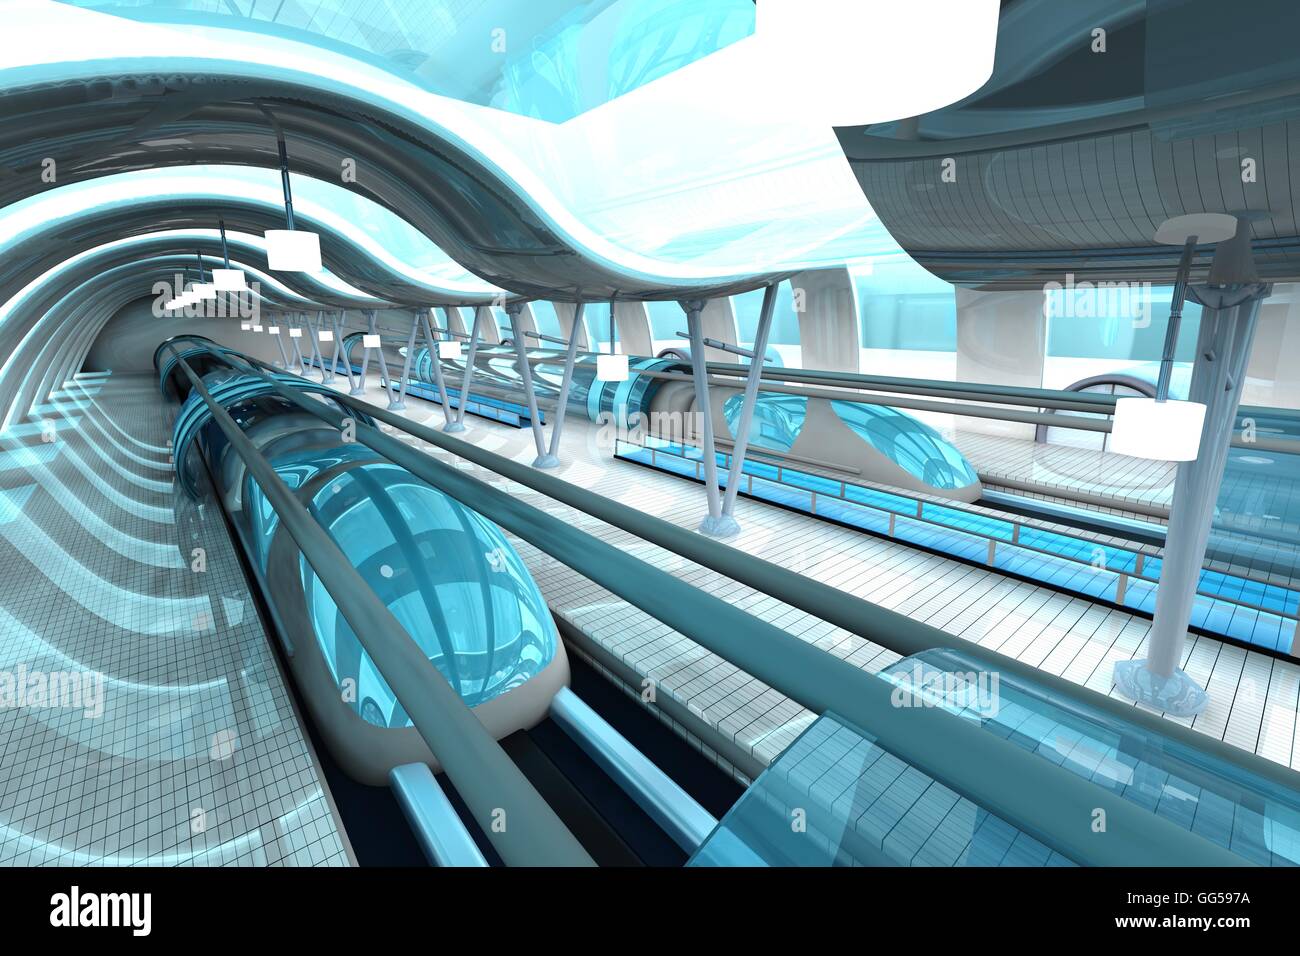 A futuristic subway or train station. 3D architecture visualization. Stock Photo